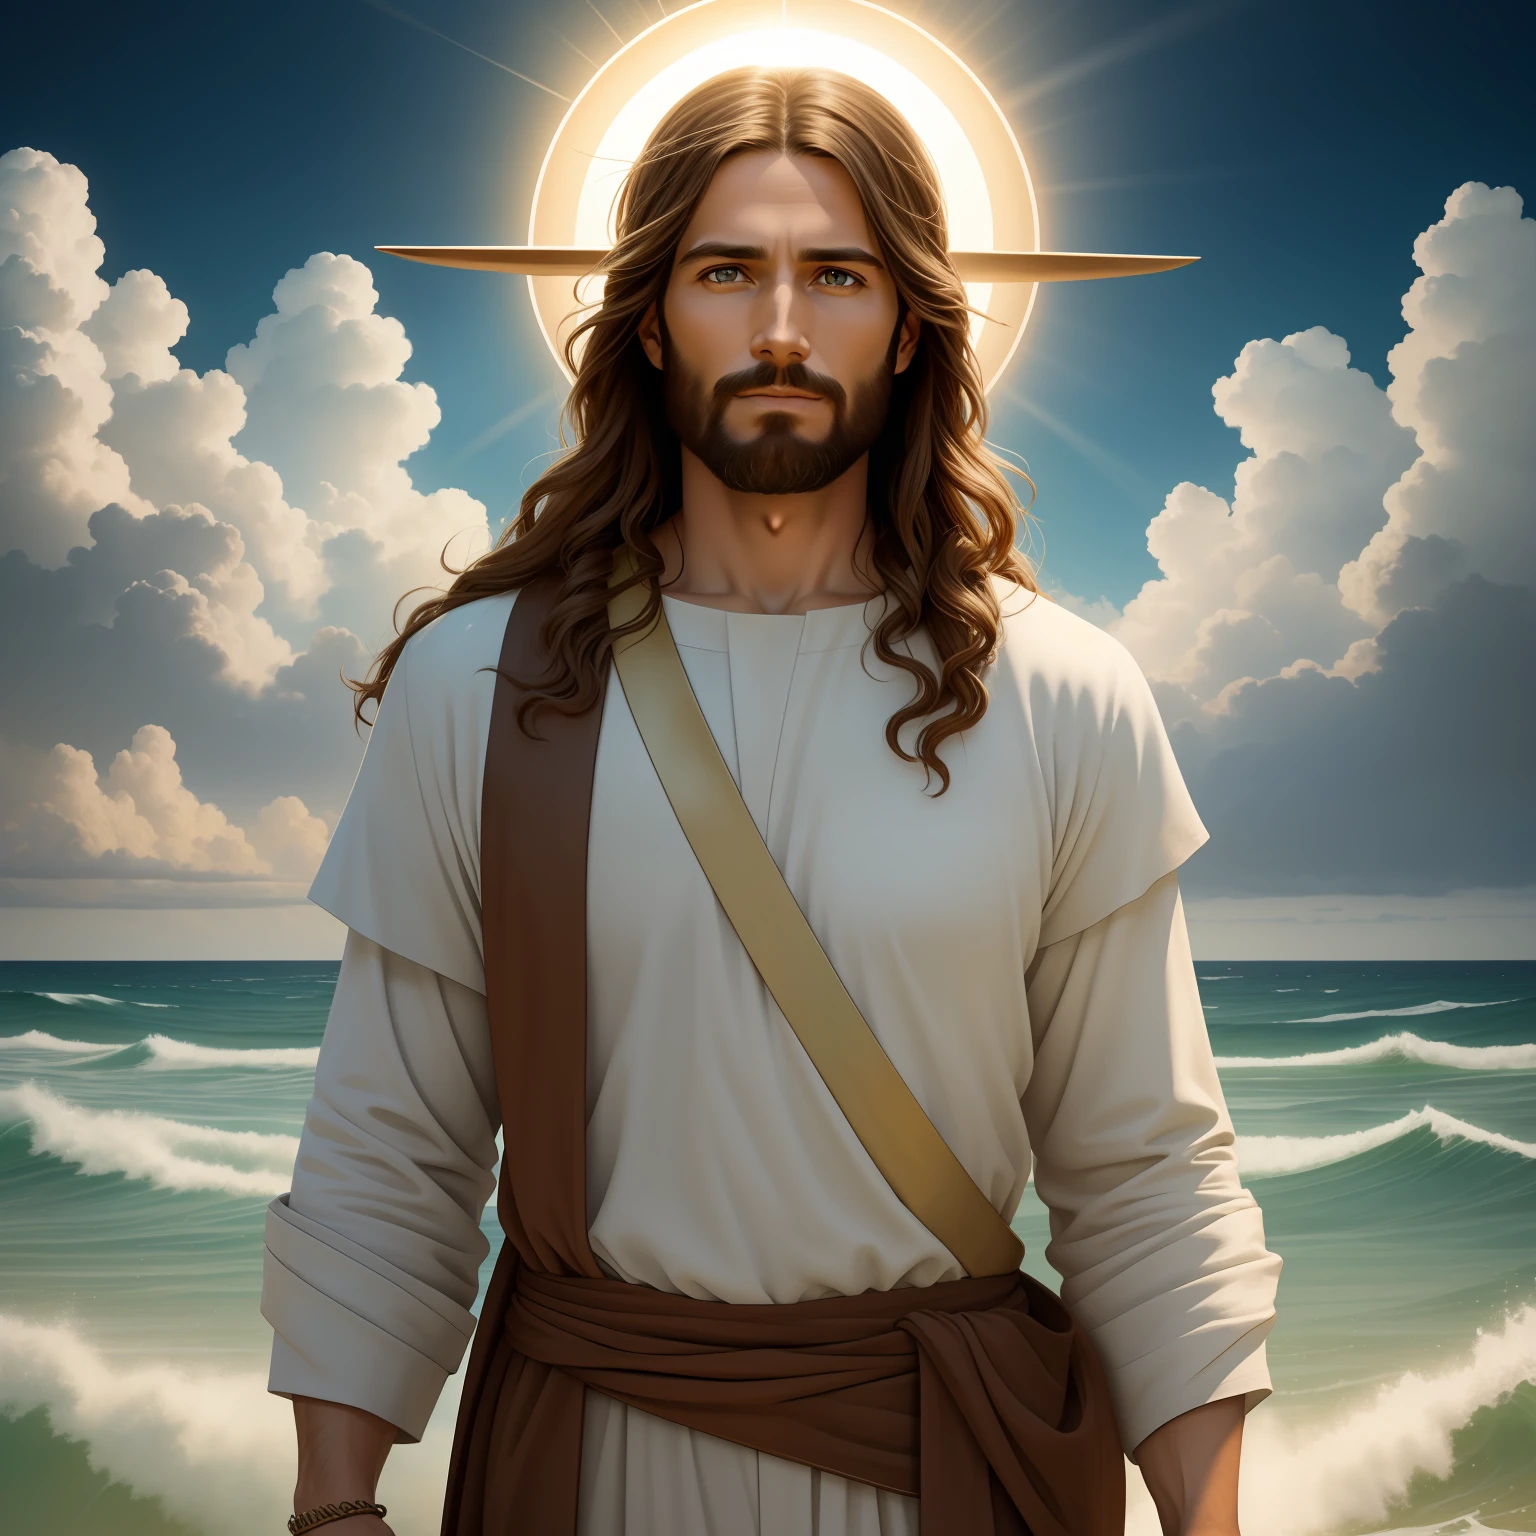 A beautiful ultra-thin 实际的 portrait of Jesus, 先知, 一名男子 35 岁 希伯来语 布鲁内特, 棕色短发, 真正完美的眼睛, 长长的棕色胡子, 和, 帮助人们 , 穿着胸部闭合的长亚麻束腰外衣, 正面视图, 全身, 圣经的, 实际的,作者：迭戈·委拉斯开兹,彼得·保罗·鲁本斯,伦勃朗,亚历克斯·罗斯,8千, 概念艺术, Photo实际的, 实际的,  插图, 油画, 超现实主义, Hyper实际的, 帮助人们 , 数字艺术, 风格, watercolorReal Jesus flying on sky 和 a flying cloud in the background, 耶稣在水上行走, 圣经的 illustration, epic 圣经的 representation, 迫使他逃跑, 从海洋里出来, ! 手拿!, 下船, 海洋之神, 美丽的表现, 8千 3D Model, 实际的,
a 3D 实际的 of 耶稣 和 a halo in the sky, 耶稣 christ, 在天堂微笑, portrait of 耶稣 christ, 耶稣 face, 35 年轻的全能神, 天神像, 格雷格·奥尔森, gigachad 耶稣, 耶稣 of nazareth, 耶稣, 上帝的面孔, 上帝看着我, 他热情地欢迎你, 他很高兴, 头像图片